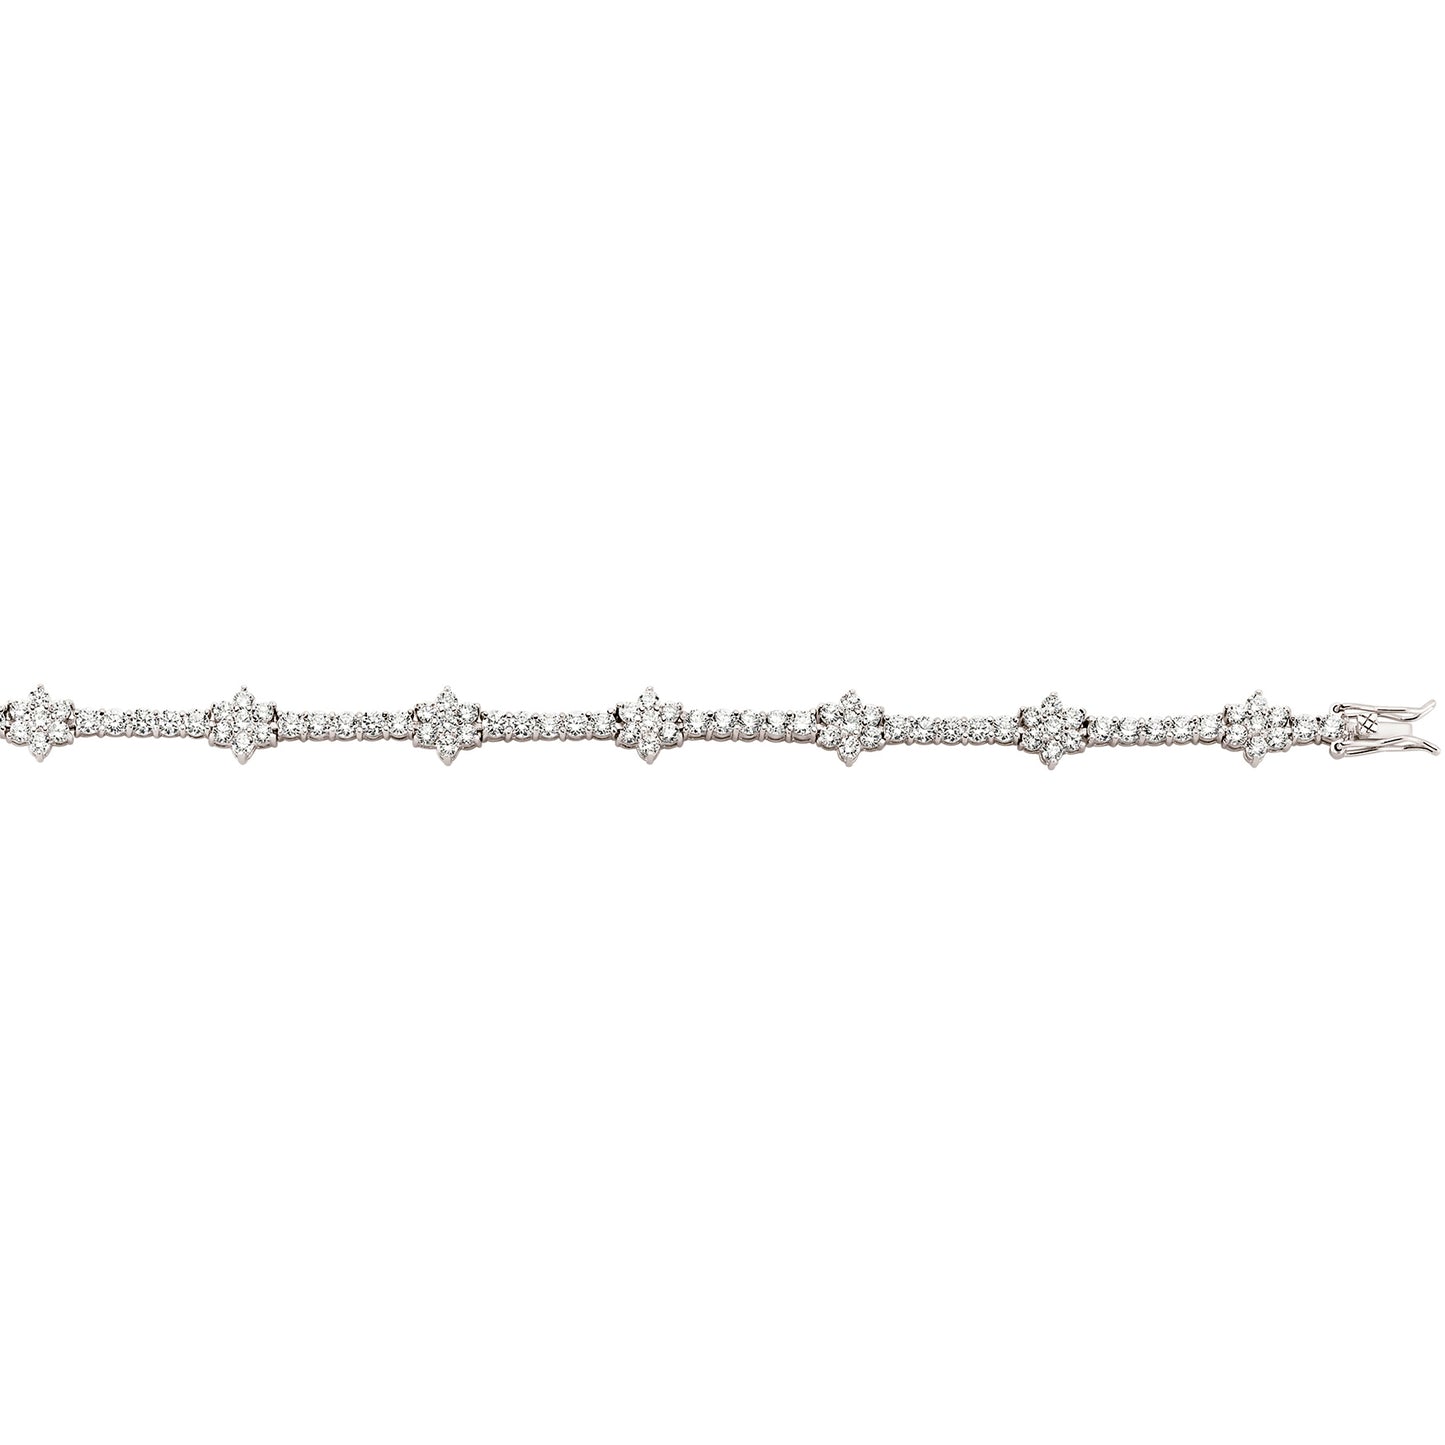 Silver  CZ Cluster Tennis Bracelet 9mm 7.5 inch - GVB086WH